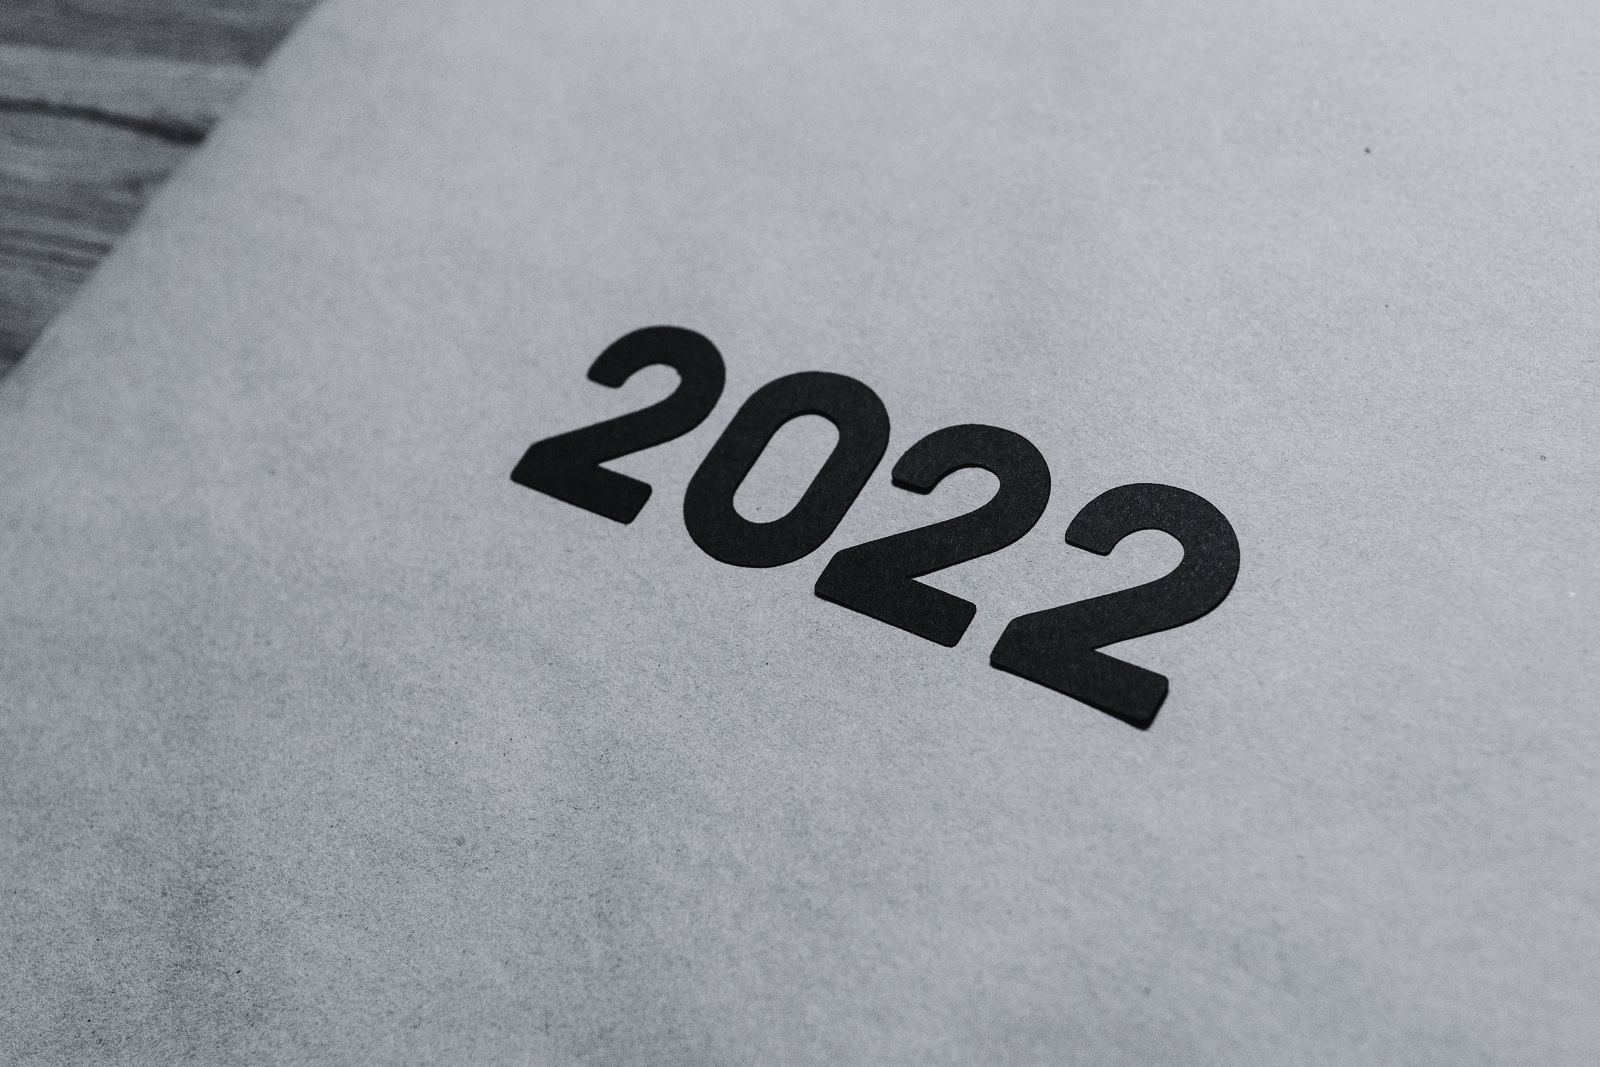 Retrospectiva 2022: 6 cases de marketing que vale a pena relembrar